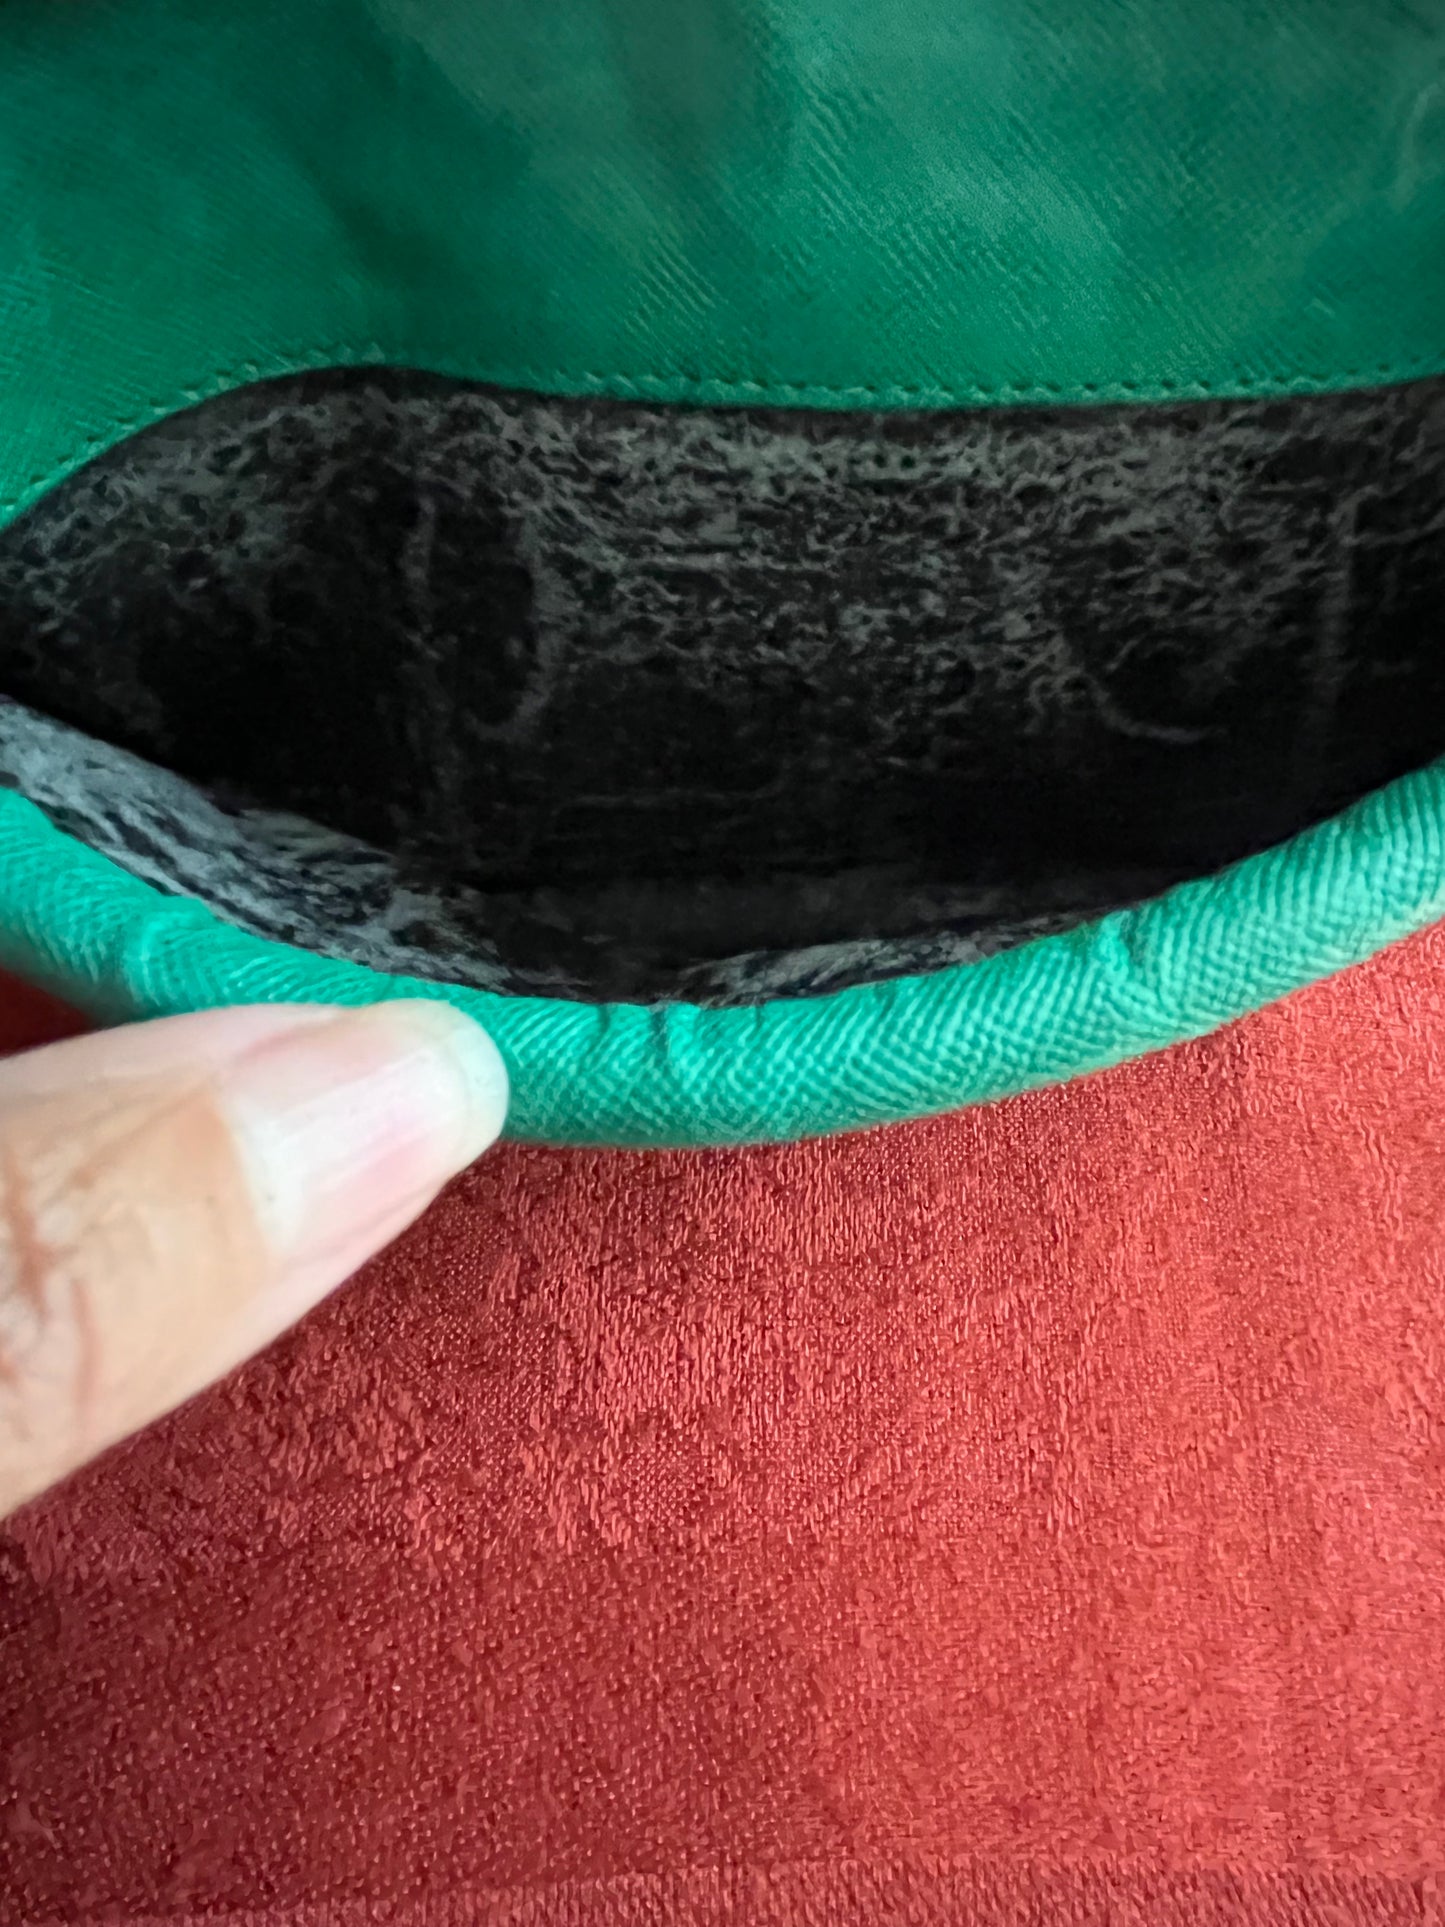 Vintage Green Leather Furla Crossbody Bag